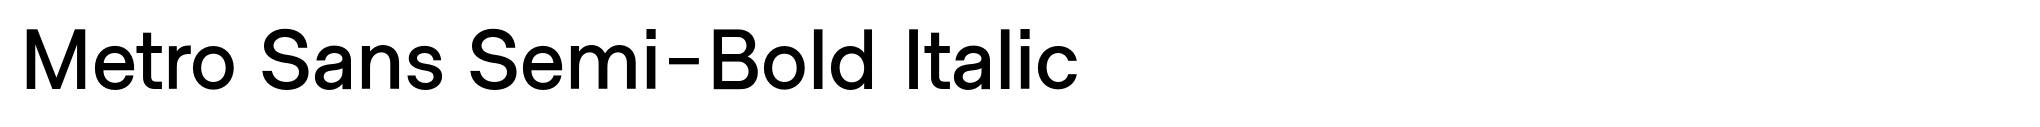 Metro Sans Semi-Bold Italic image